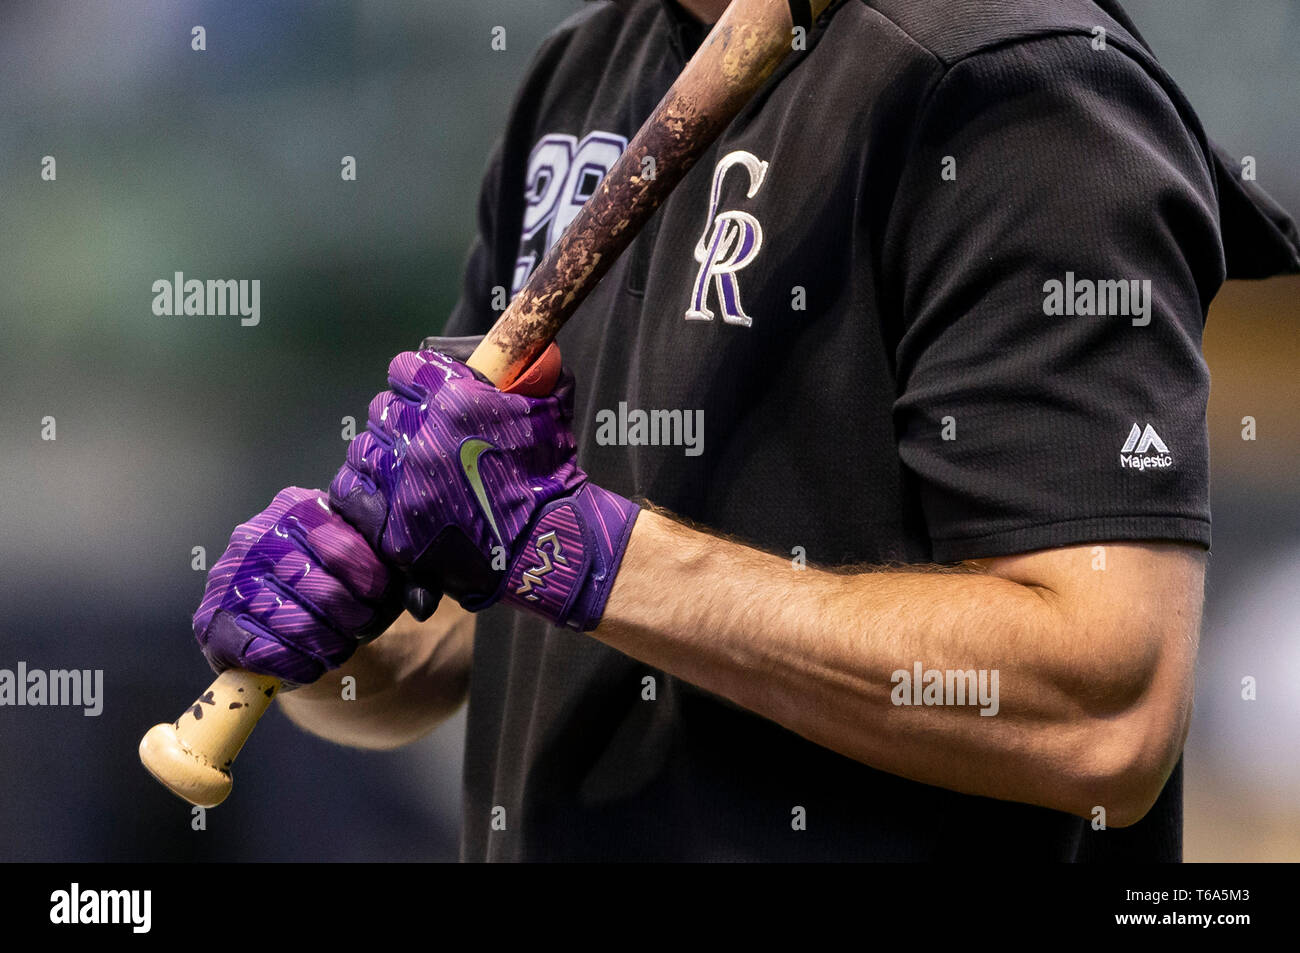 nike batting gloves 2019